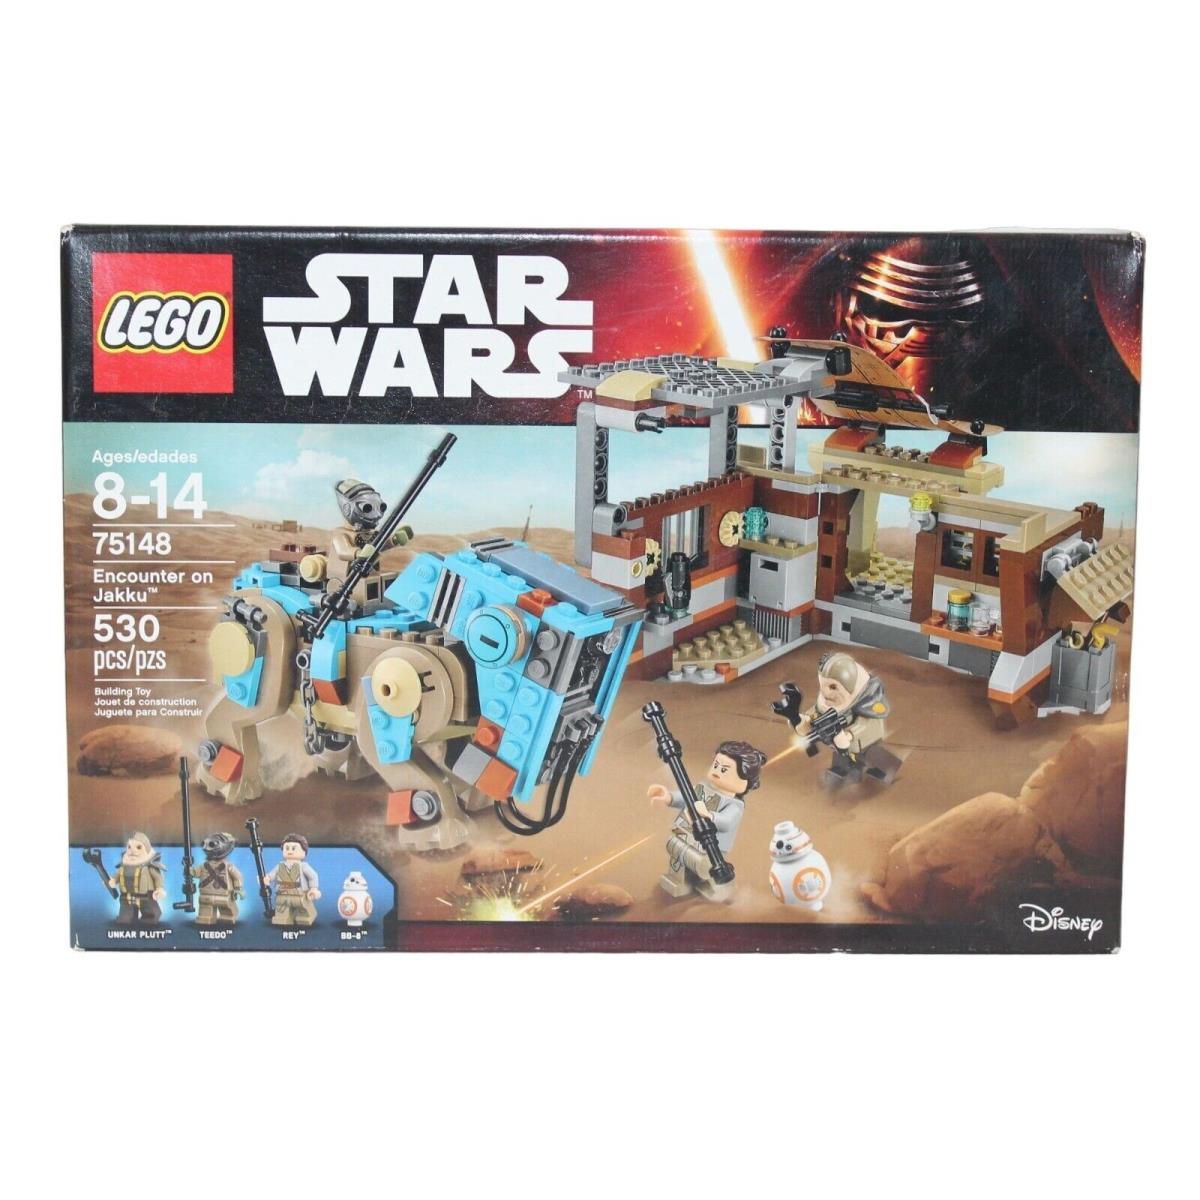 Lego 75148 Star Wars Encounter On Jakku Year 2016